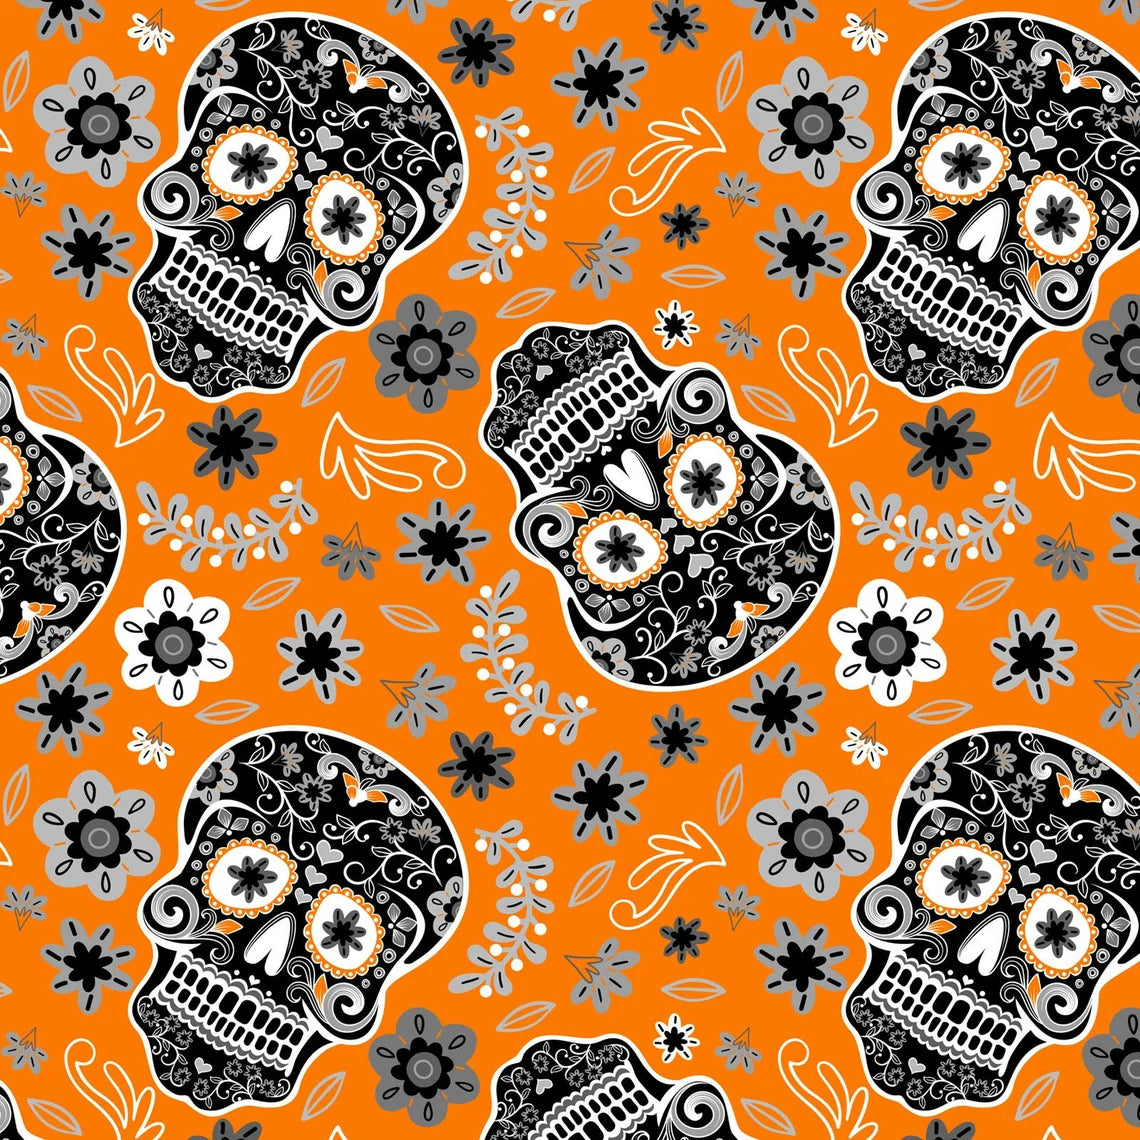 Black Sugar Skulls-Orange Background-David Textiles-By The Yard